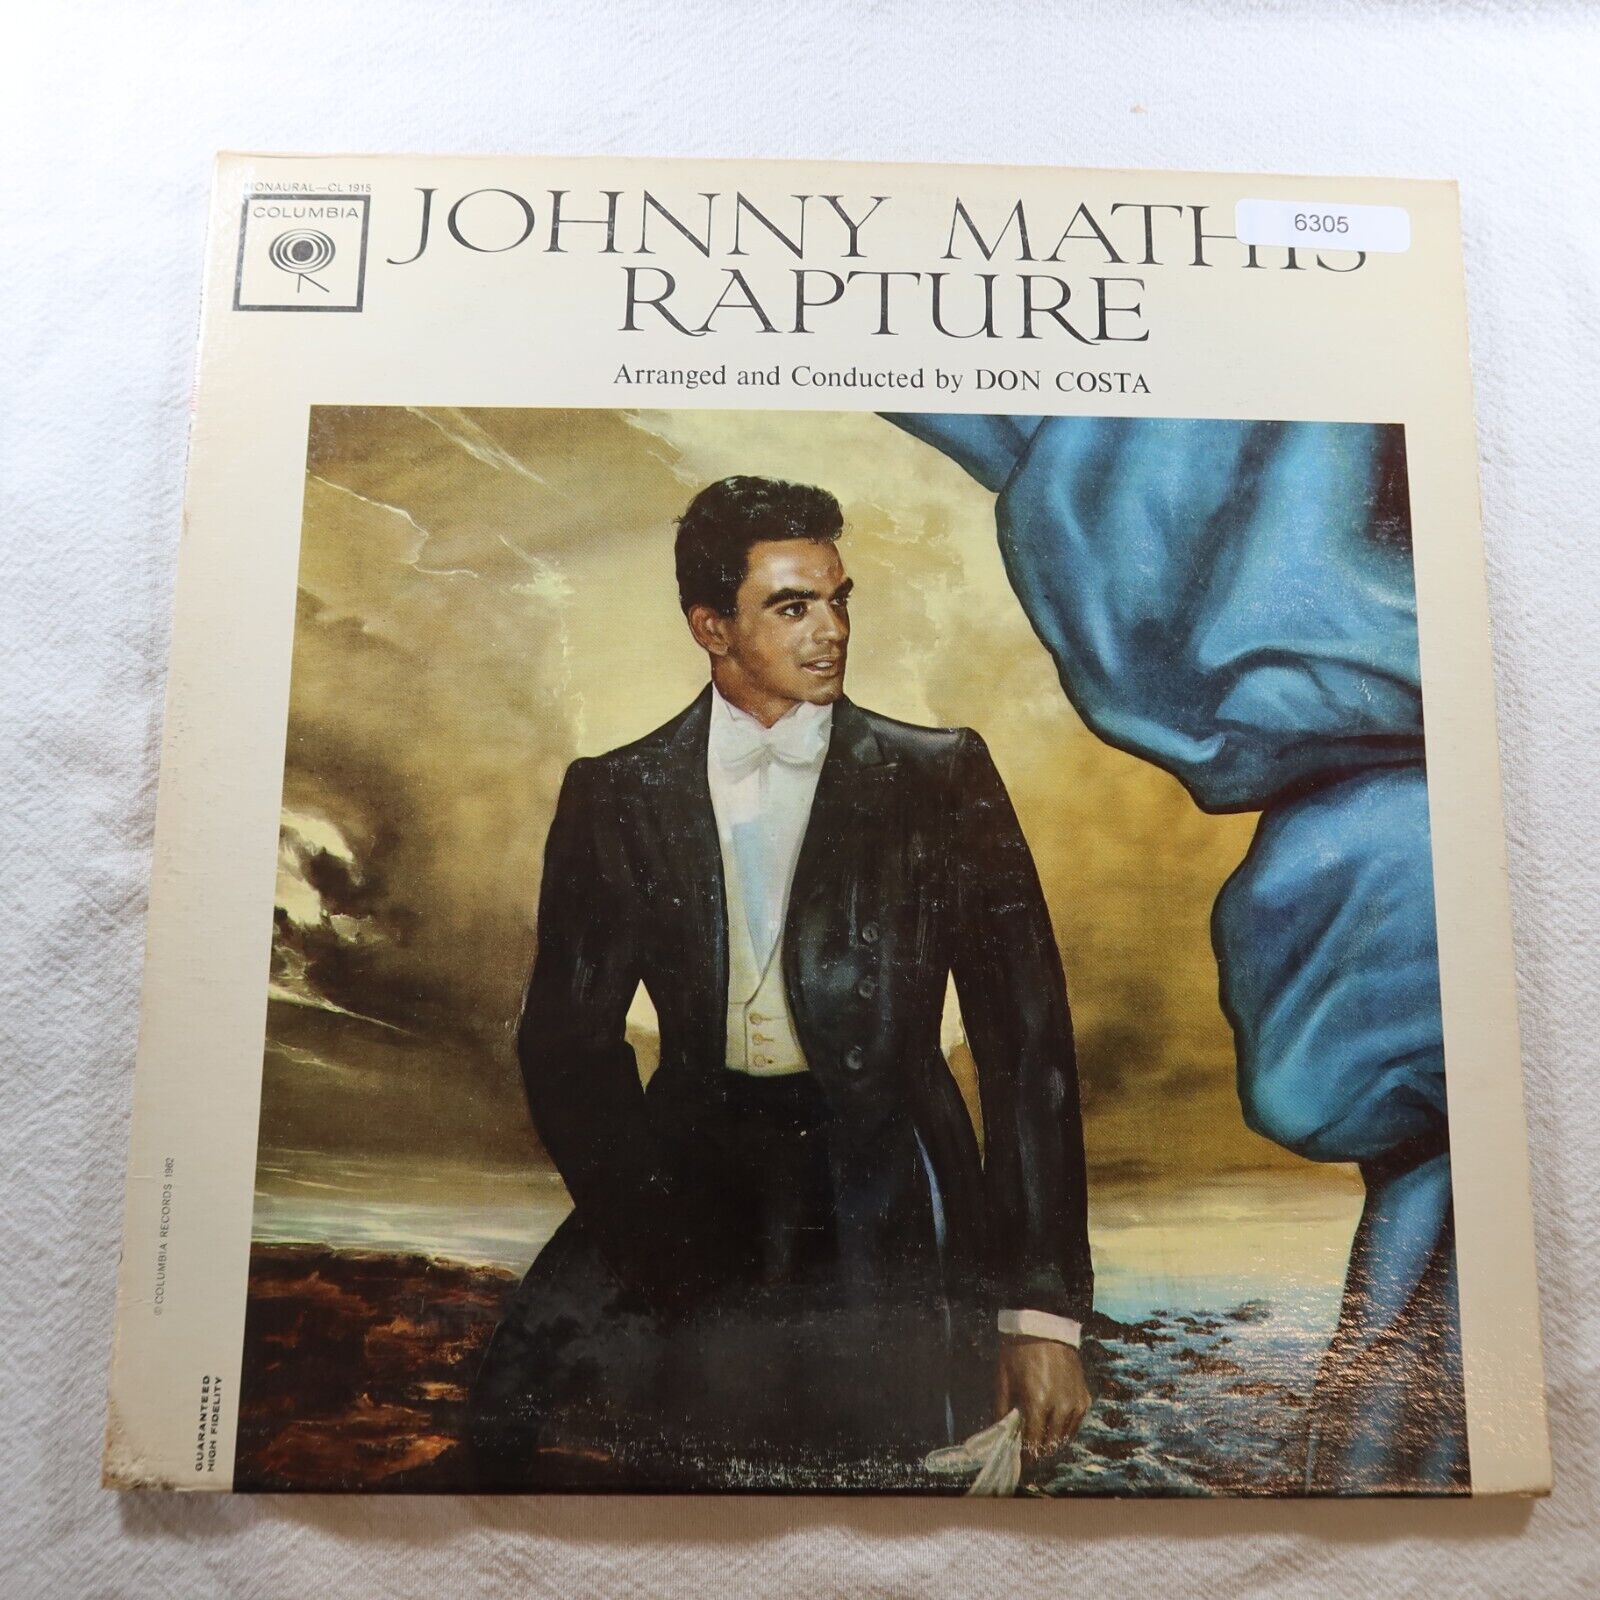 Johnny Mathis Rapture   Record Album Vinyl LP